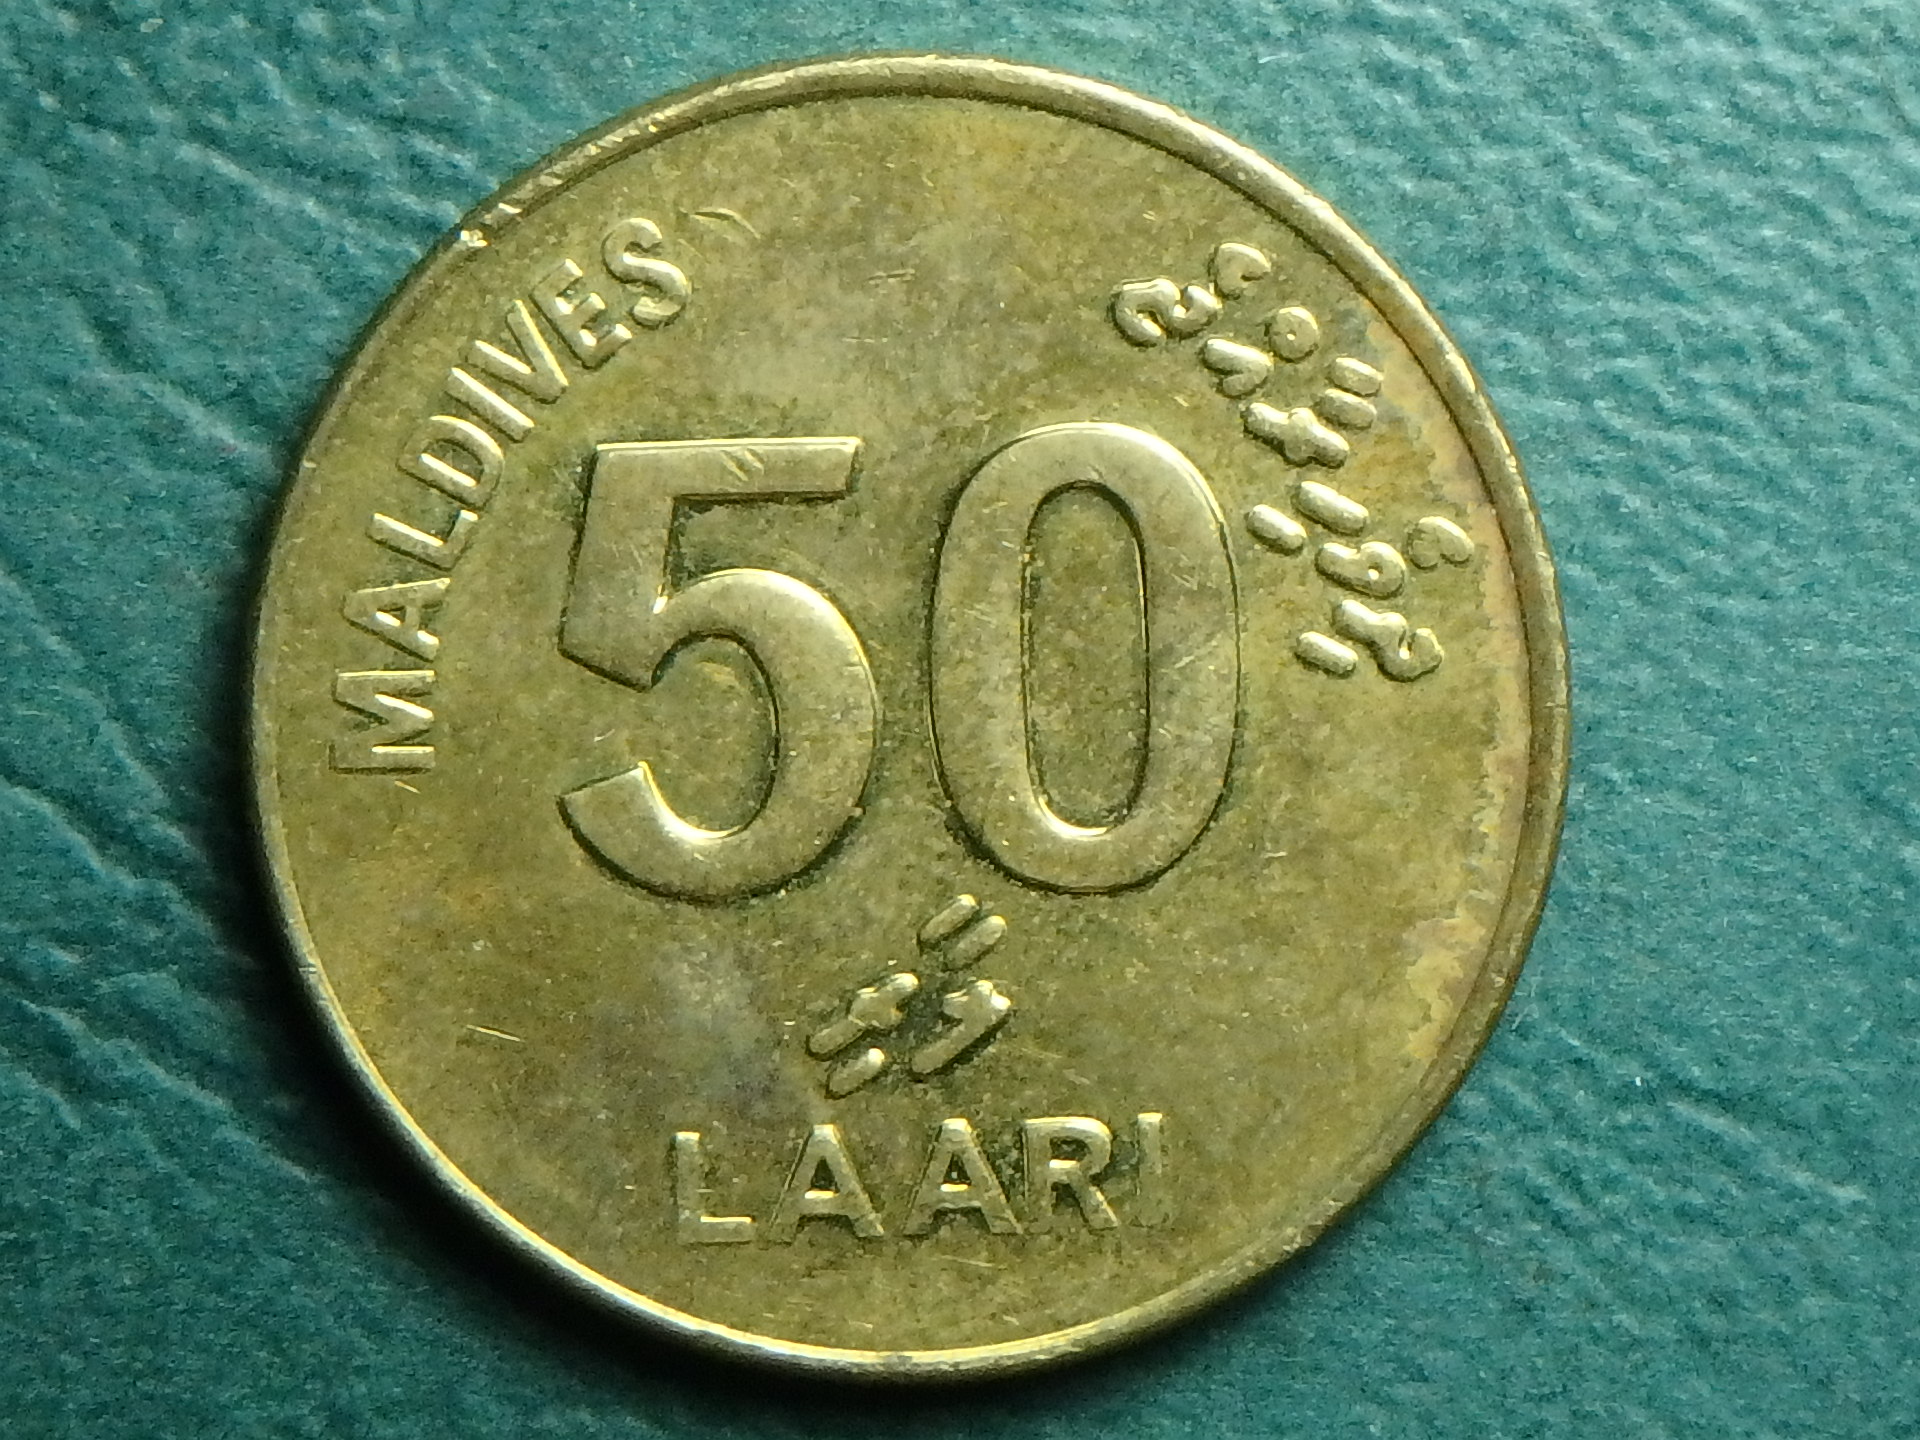 2008 Maldives 50 l rev.JPG